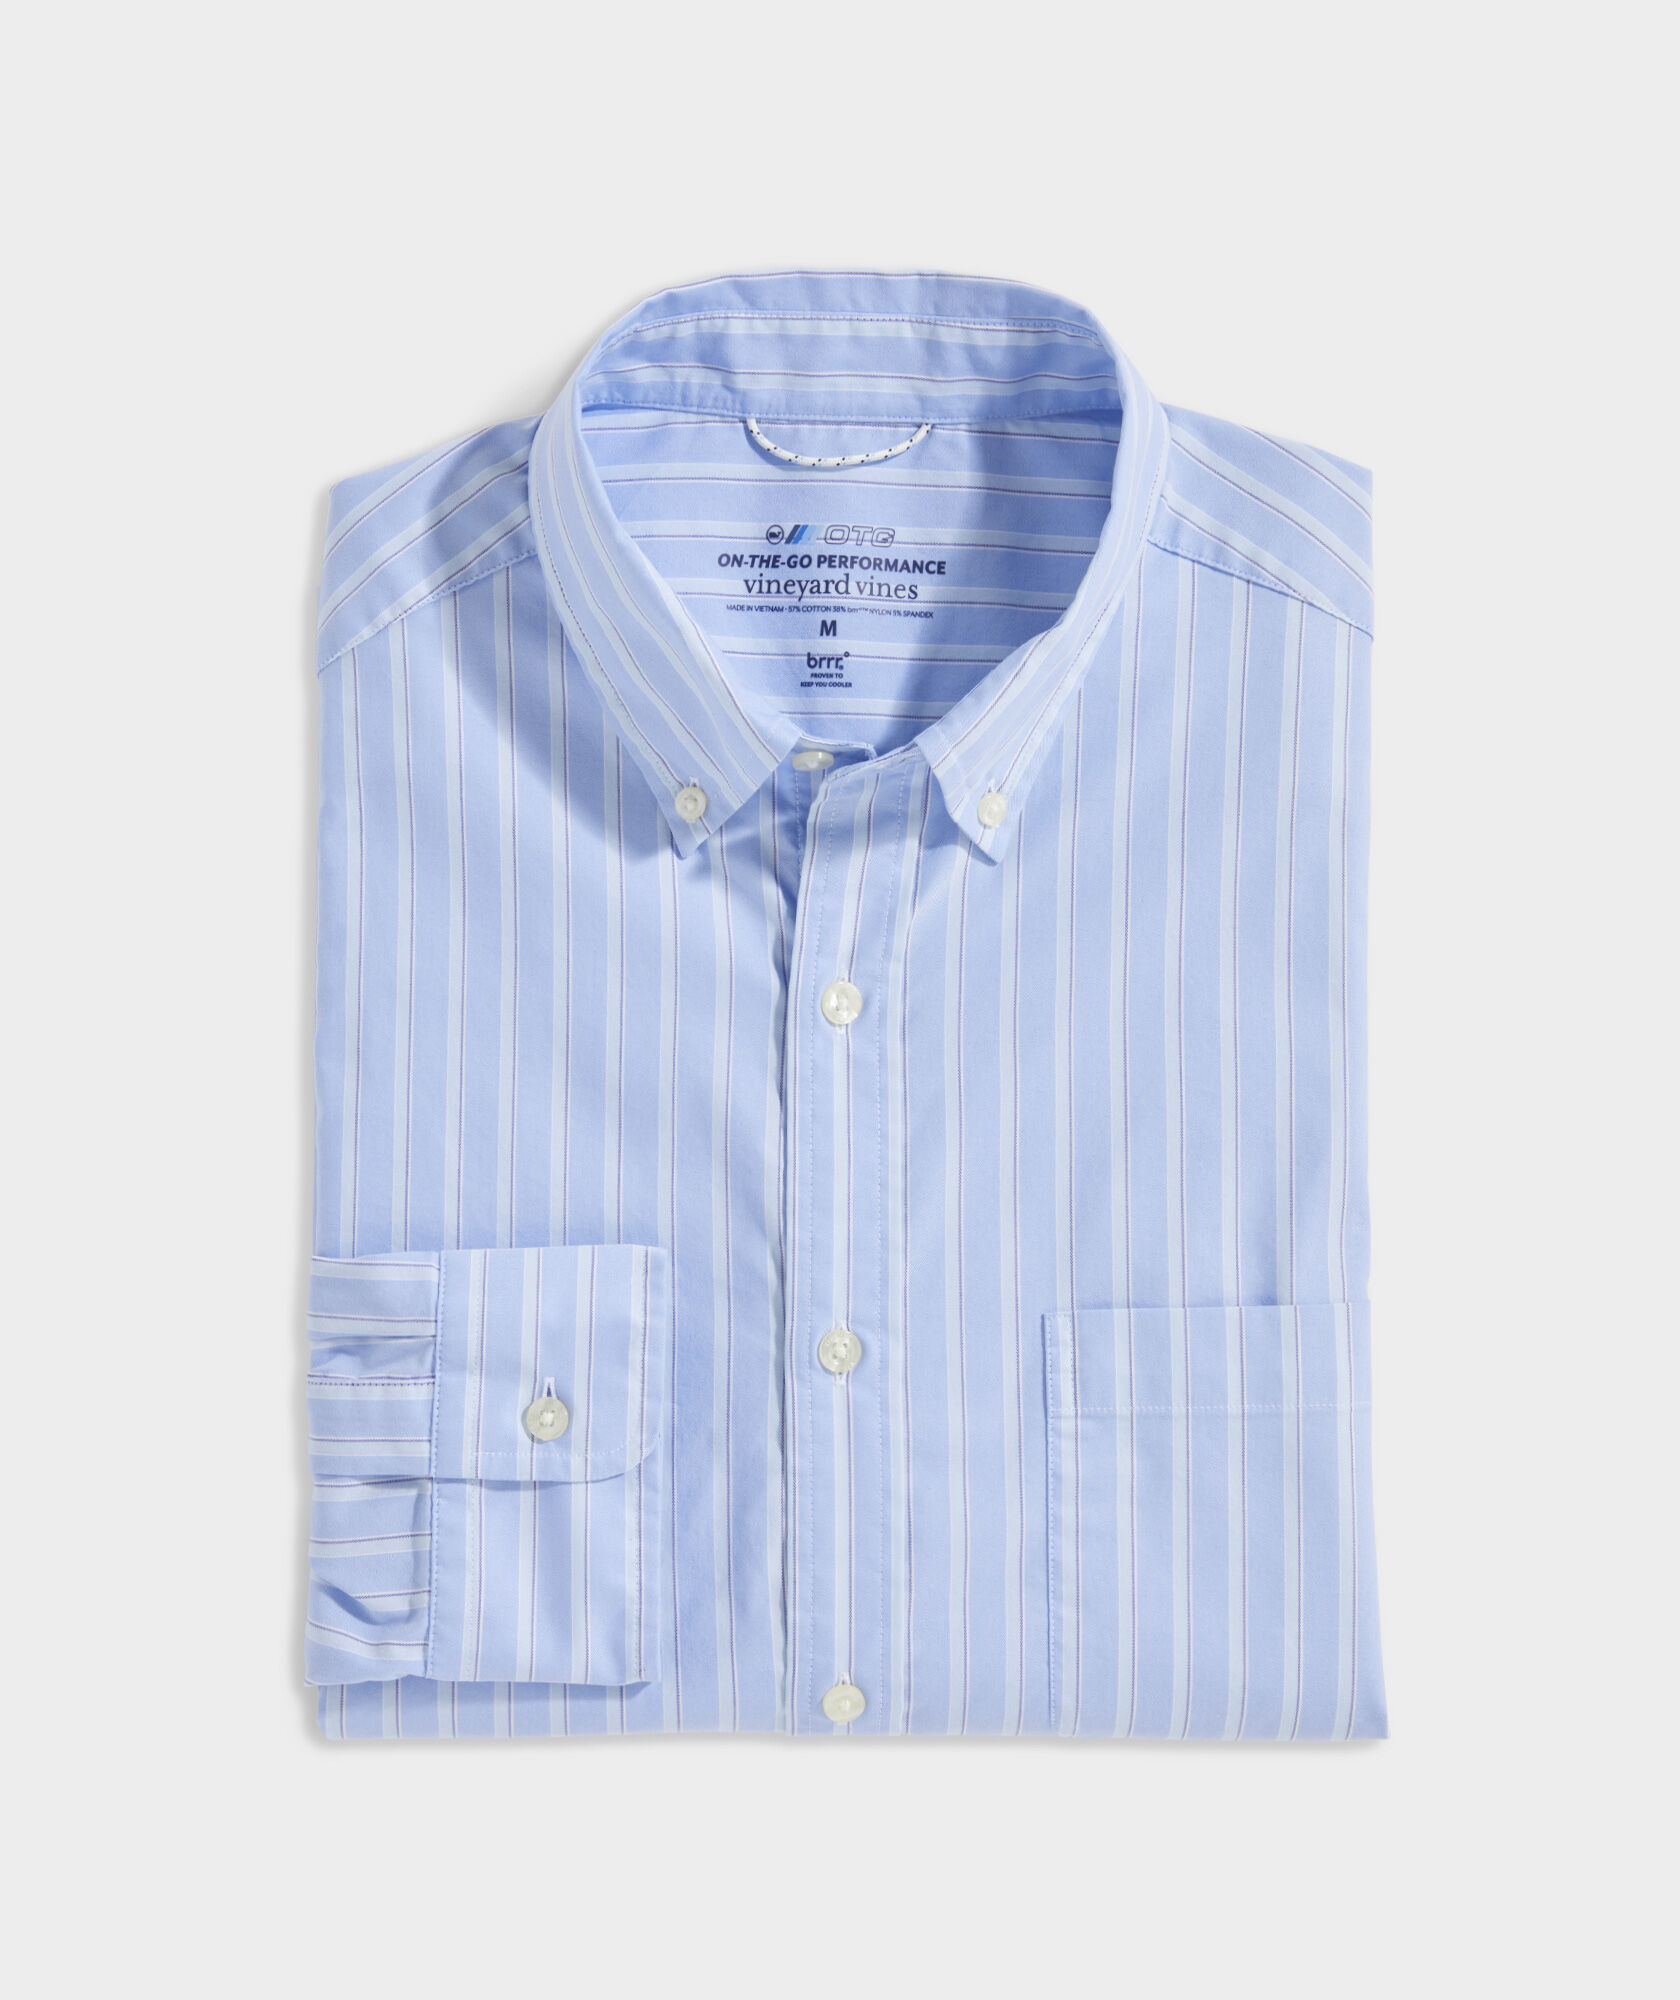 Men's Long- and Short-Sleeve Button-Down Shirts at vineyard vines